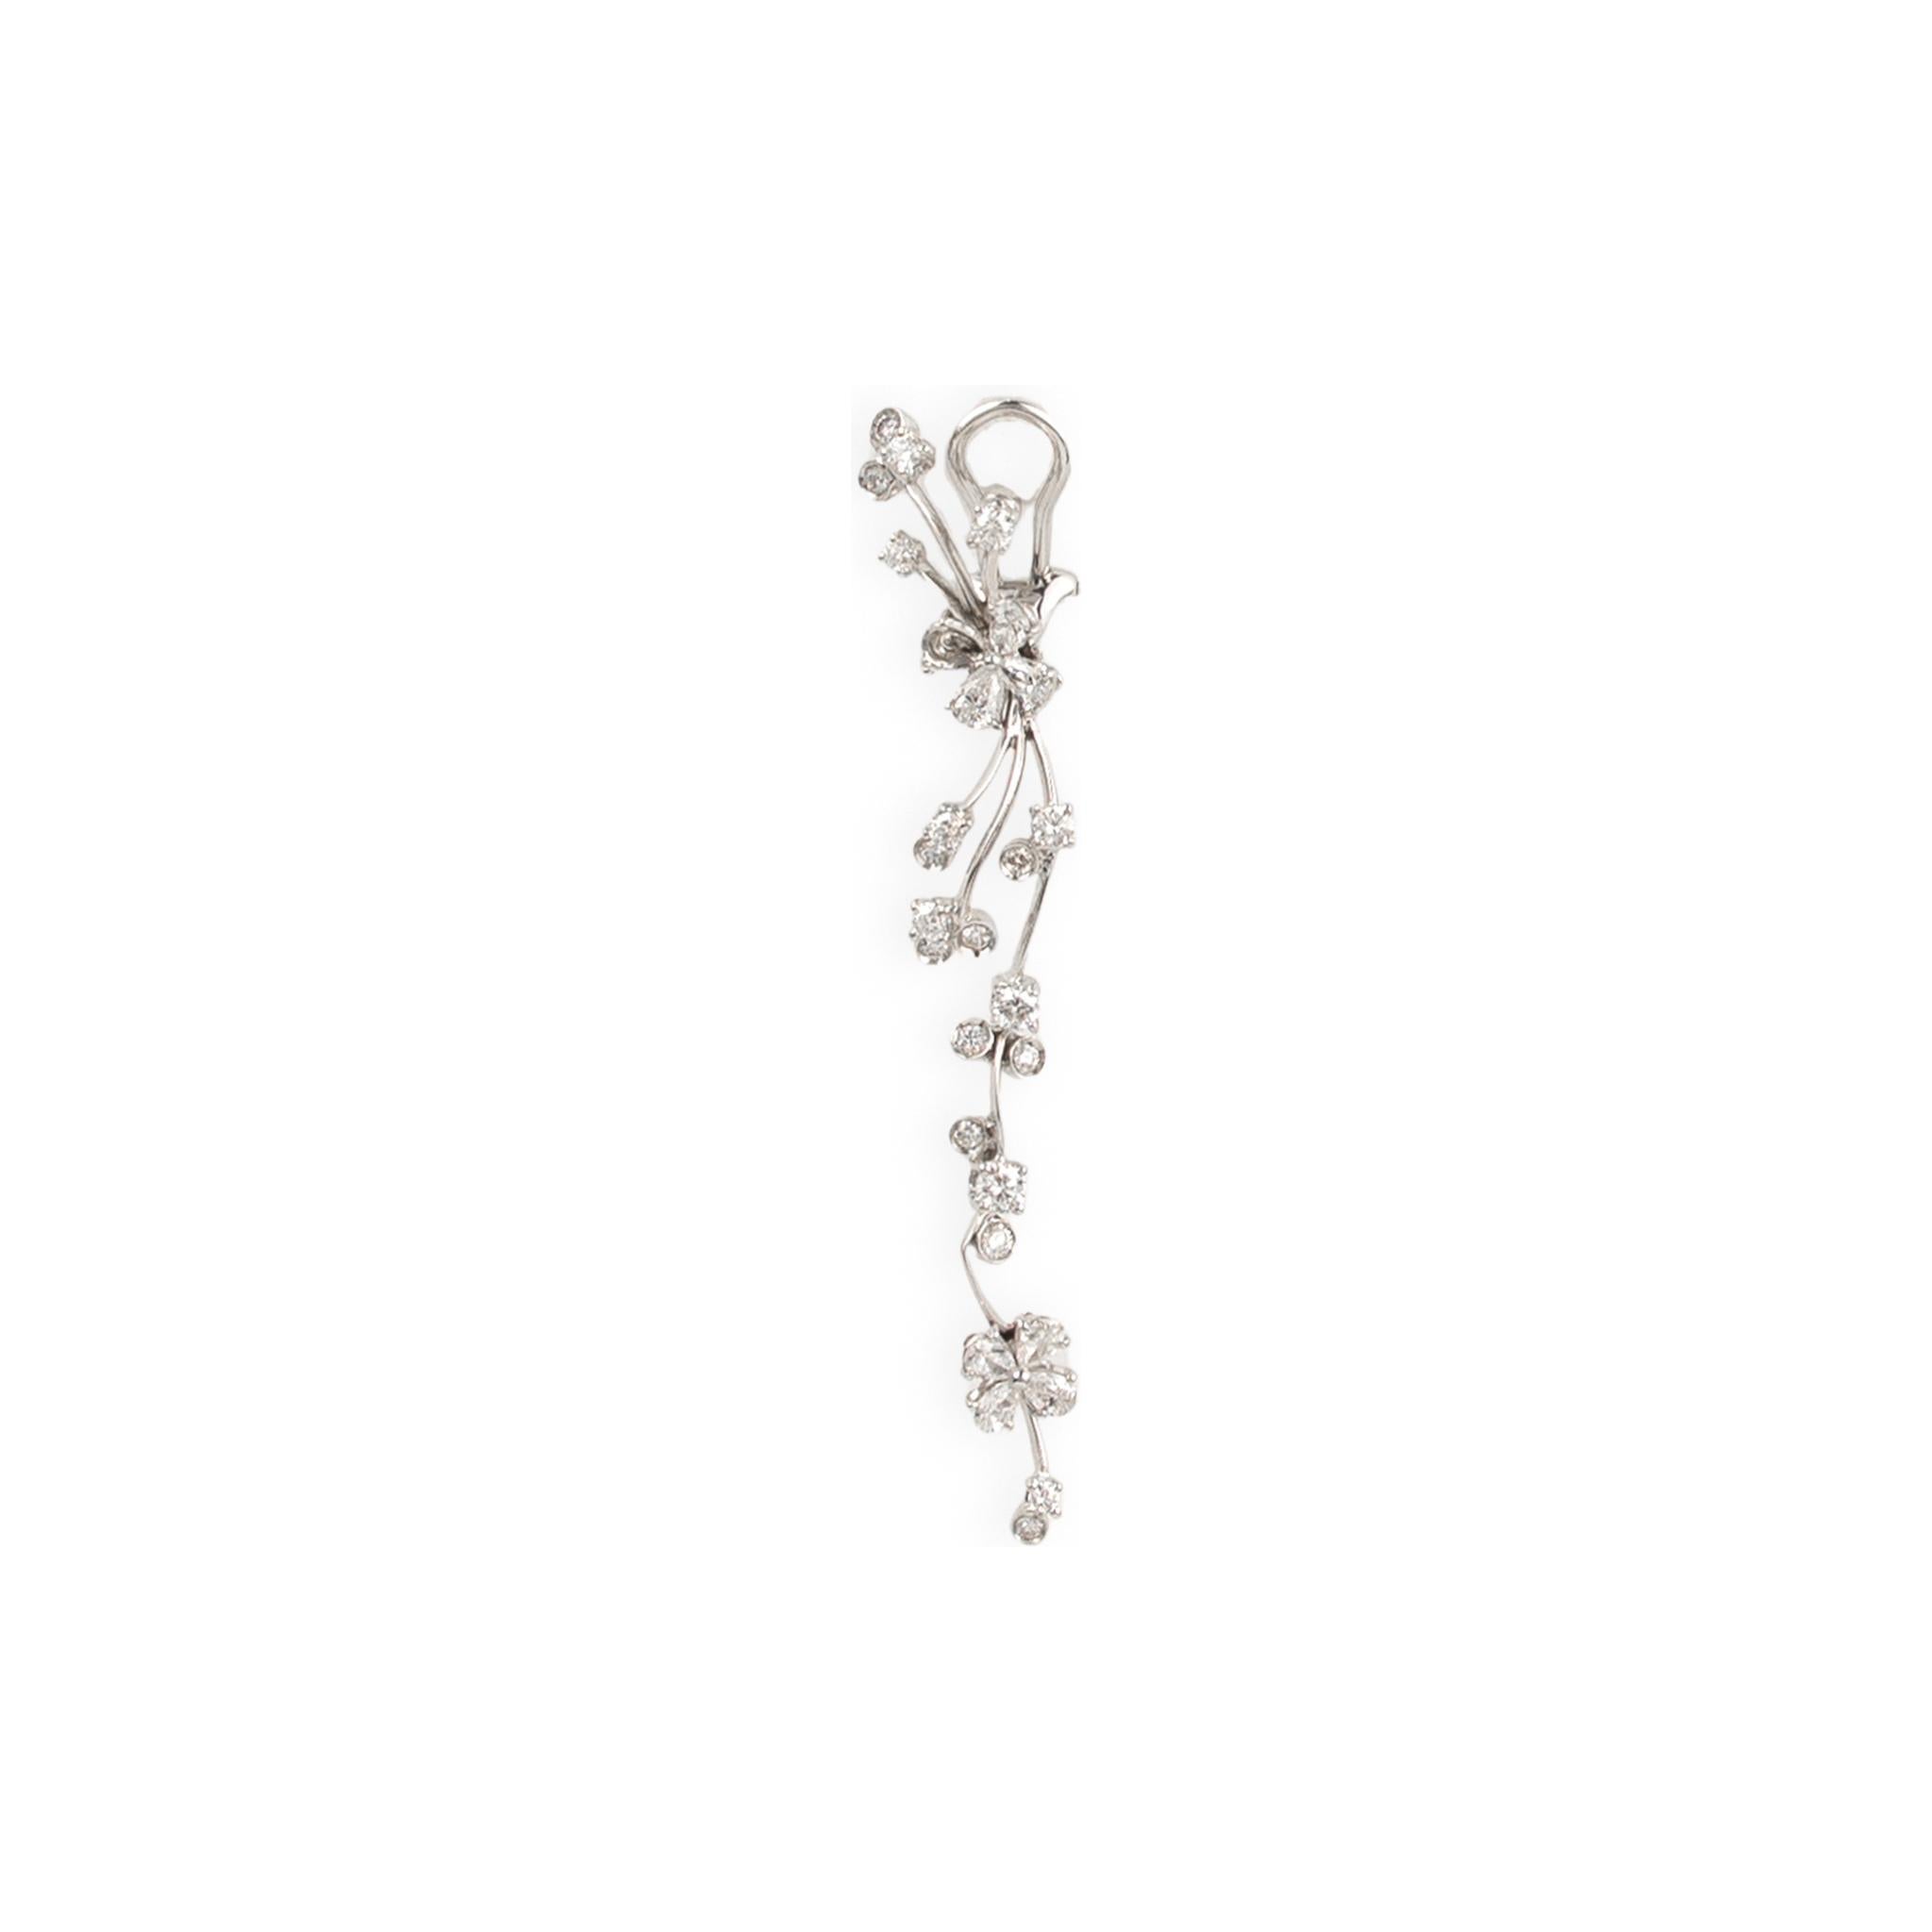 Stefan Hafner Earrings
18K White Gold
Diamonds: 3.41ctw
SKU: BLU01561
Retail price: $21,350.00